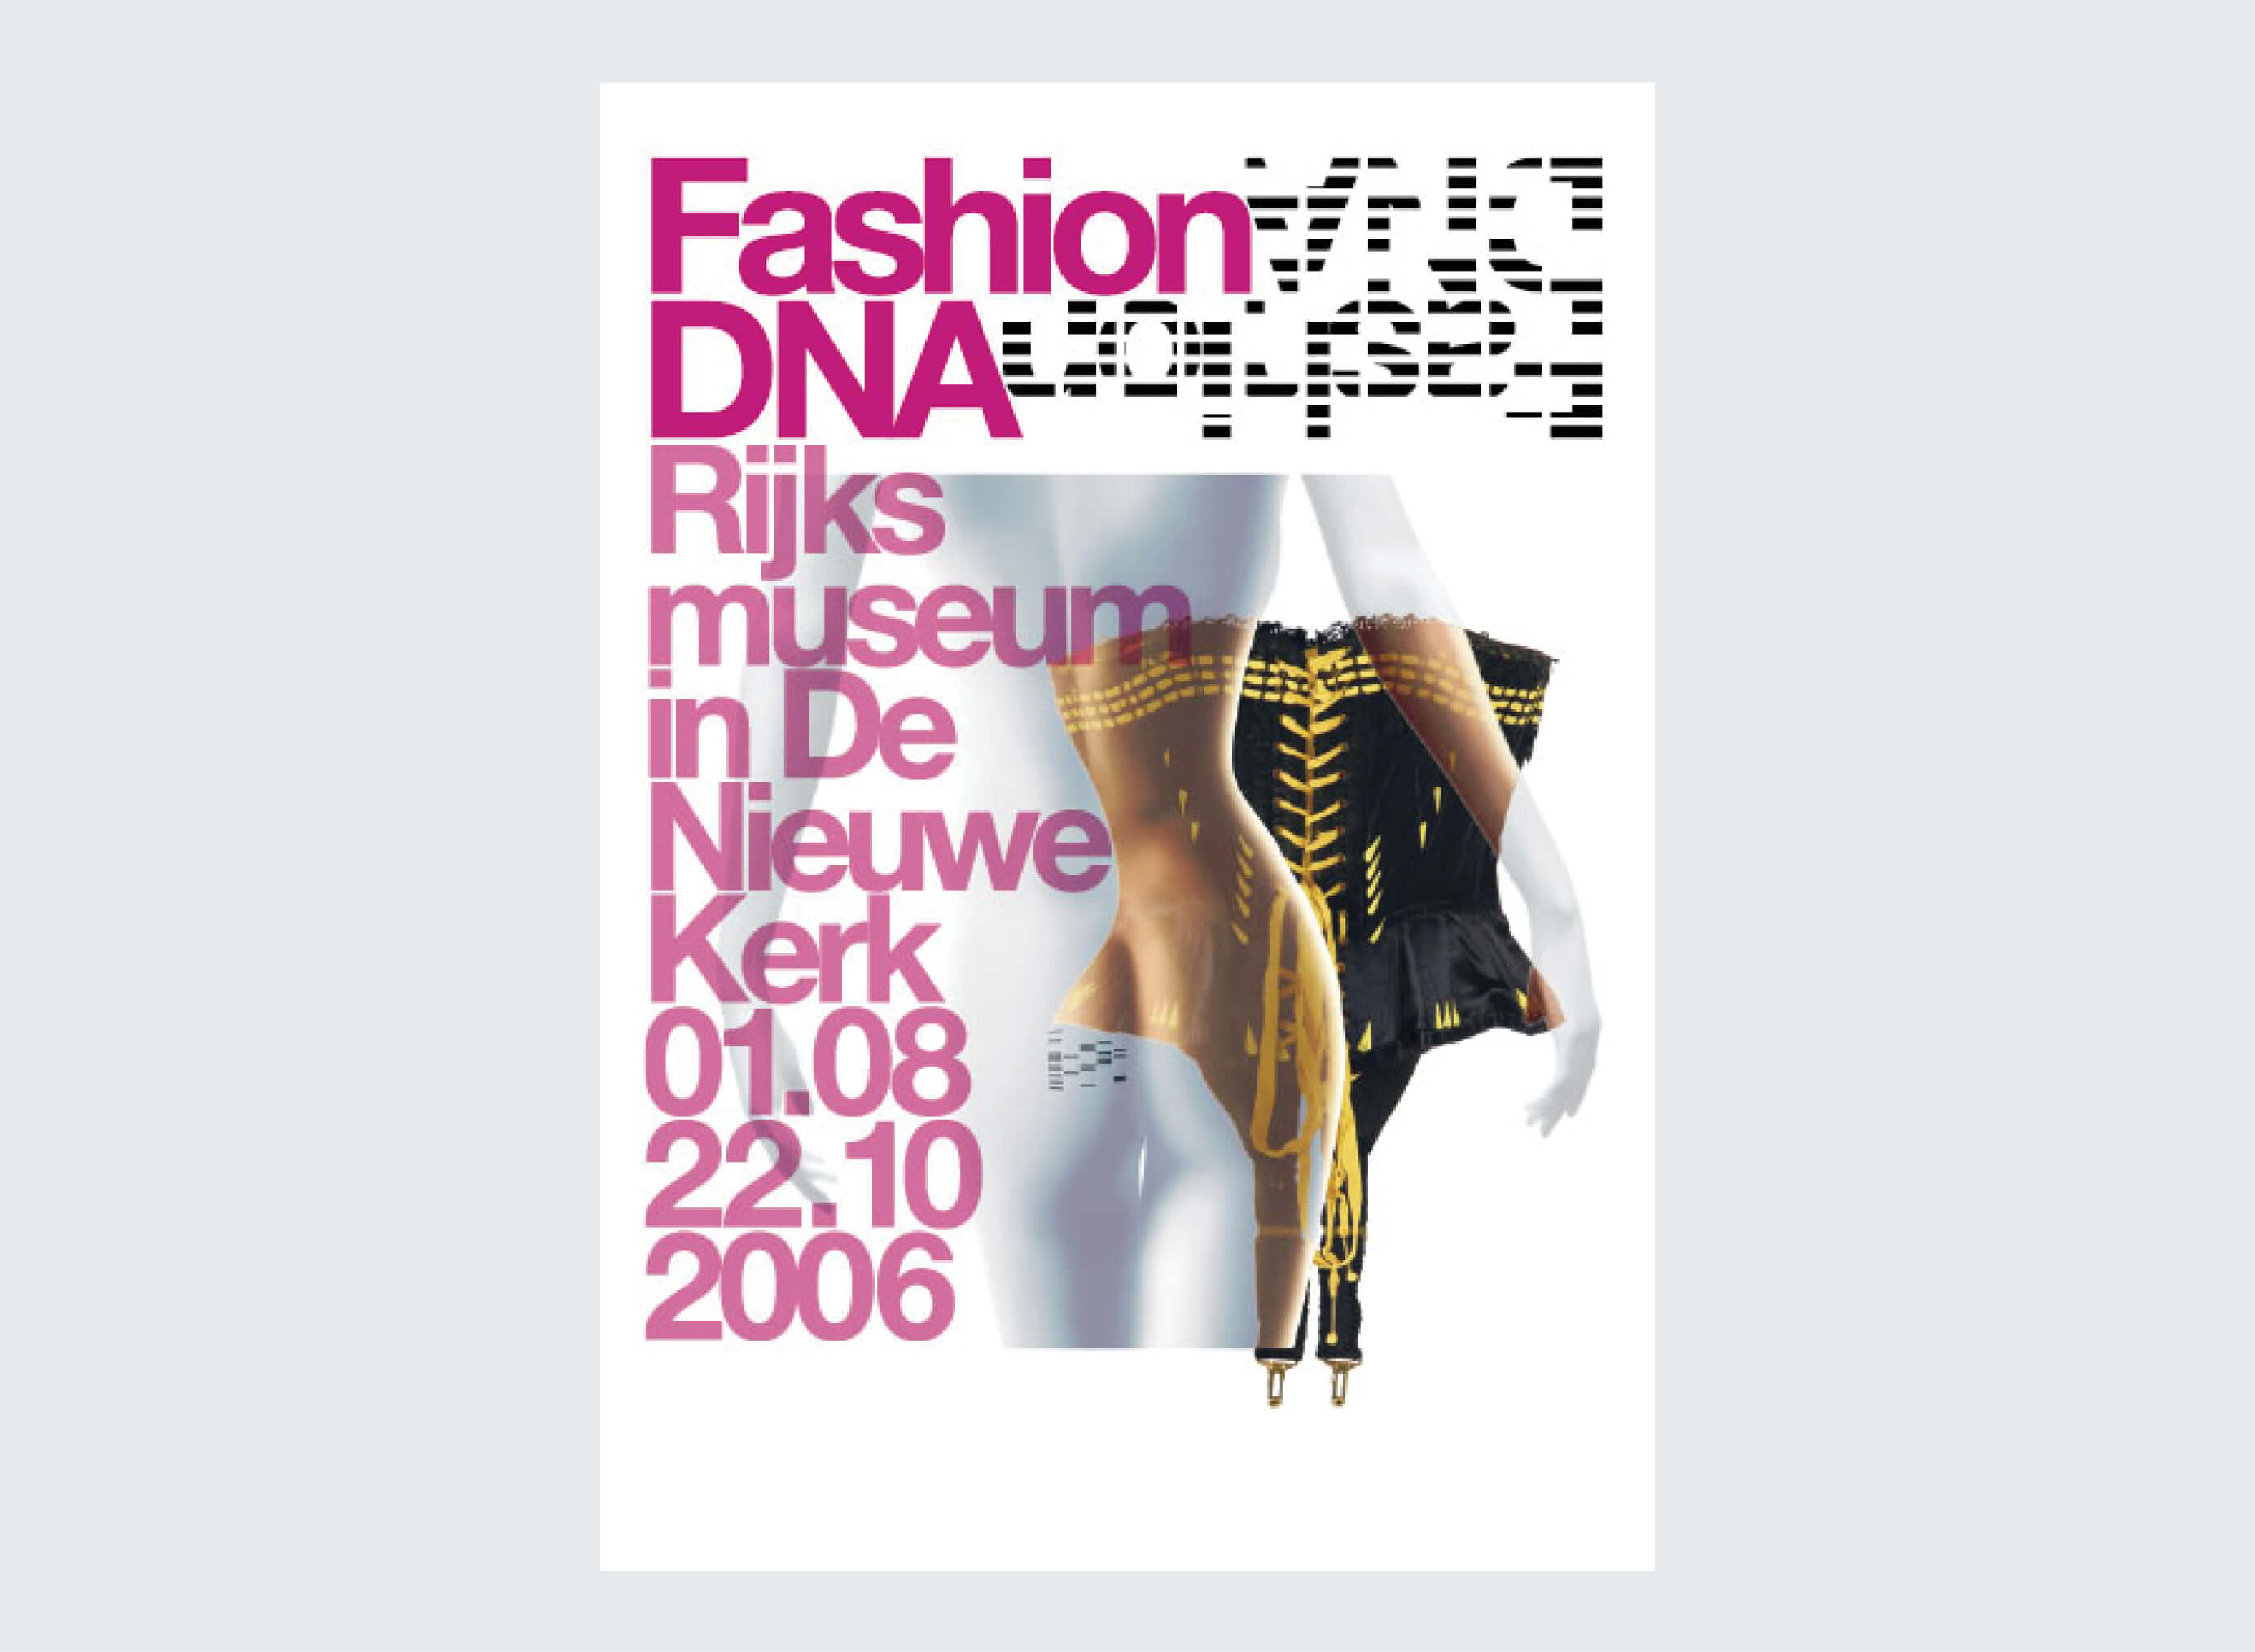 Fashion-DNA